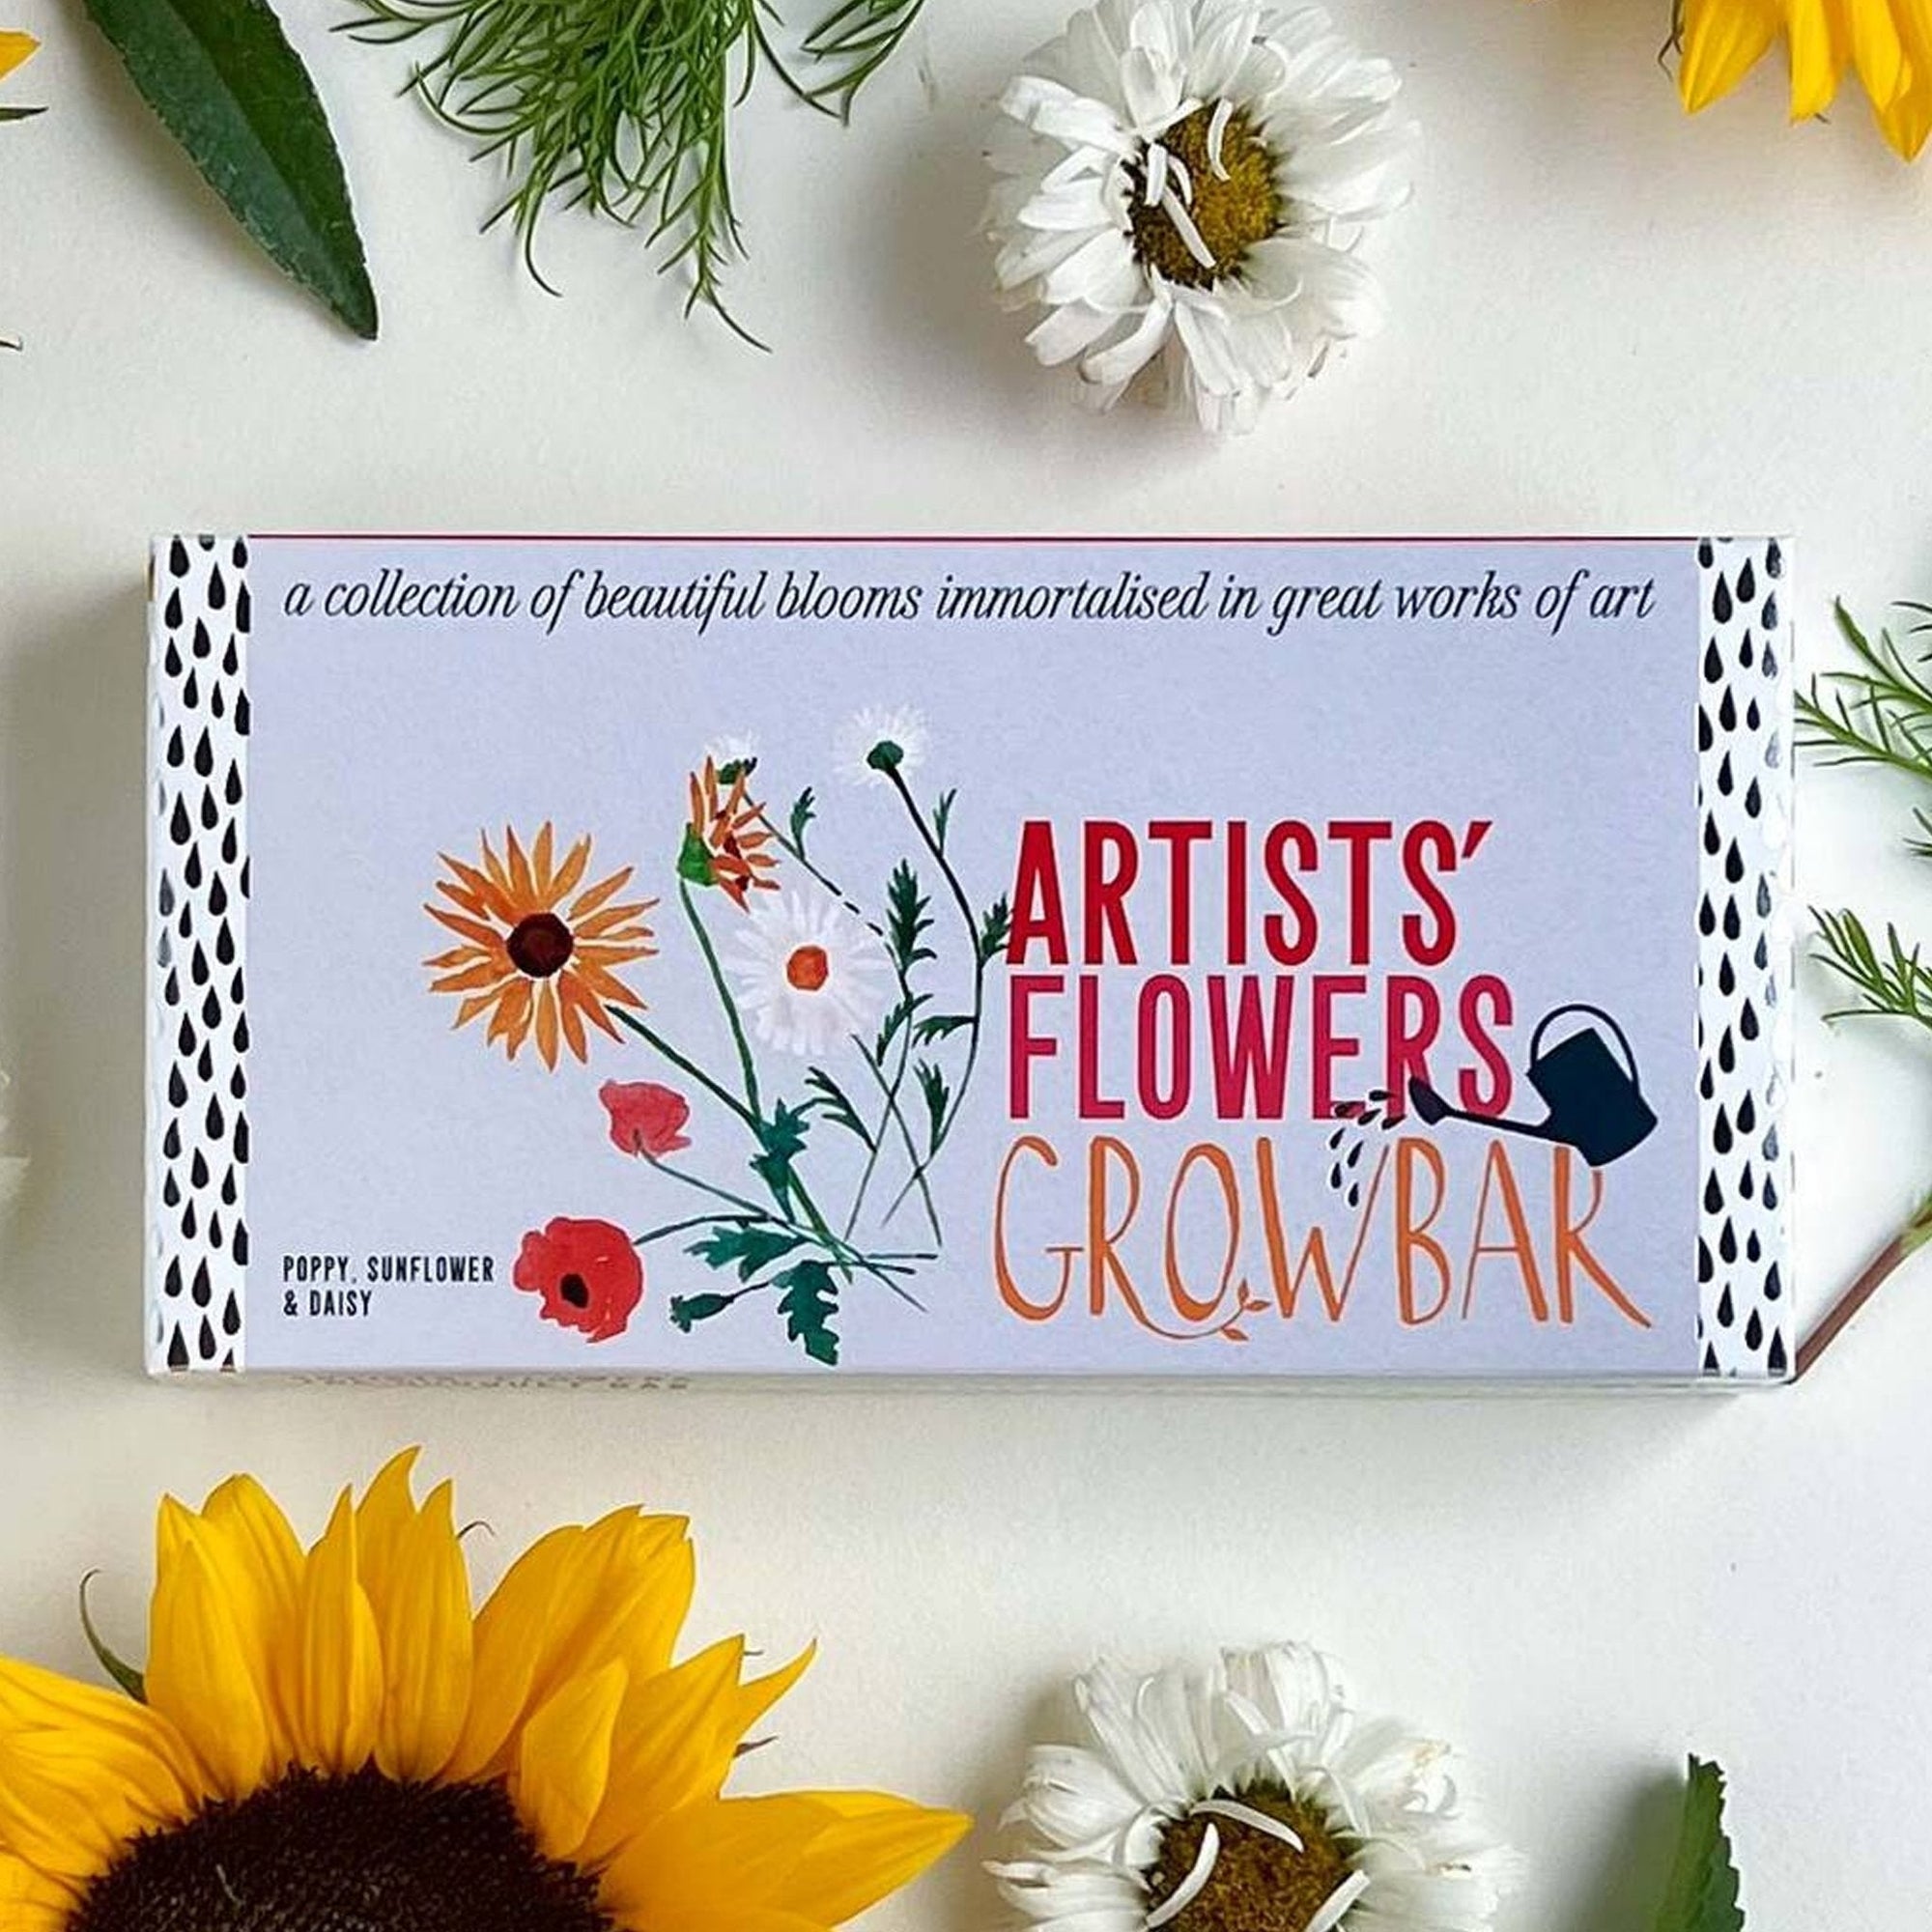 Artists' Flowers Growbar - Boo•kay ldn